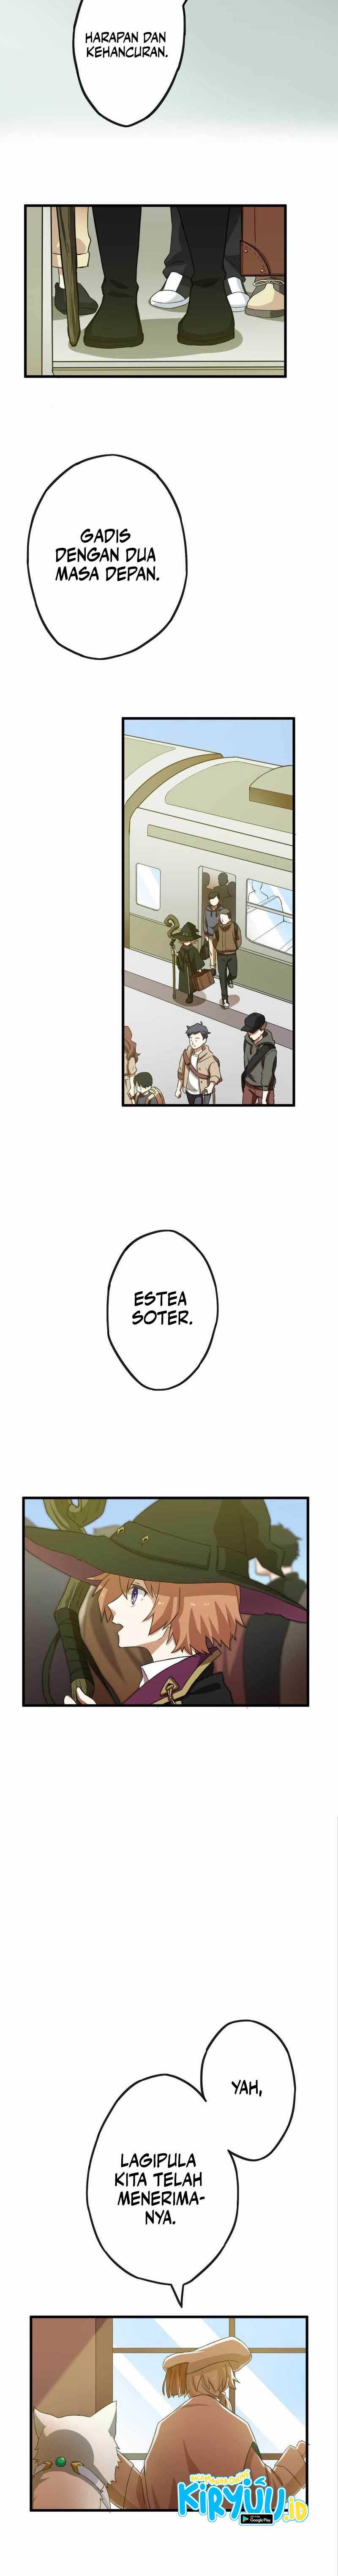 Estea: Inheritor of the Magic of the Beginning Chapter 03